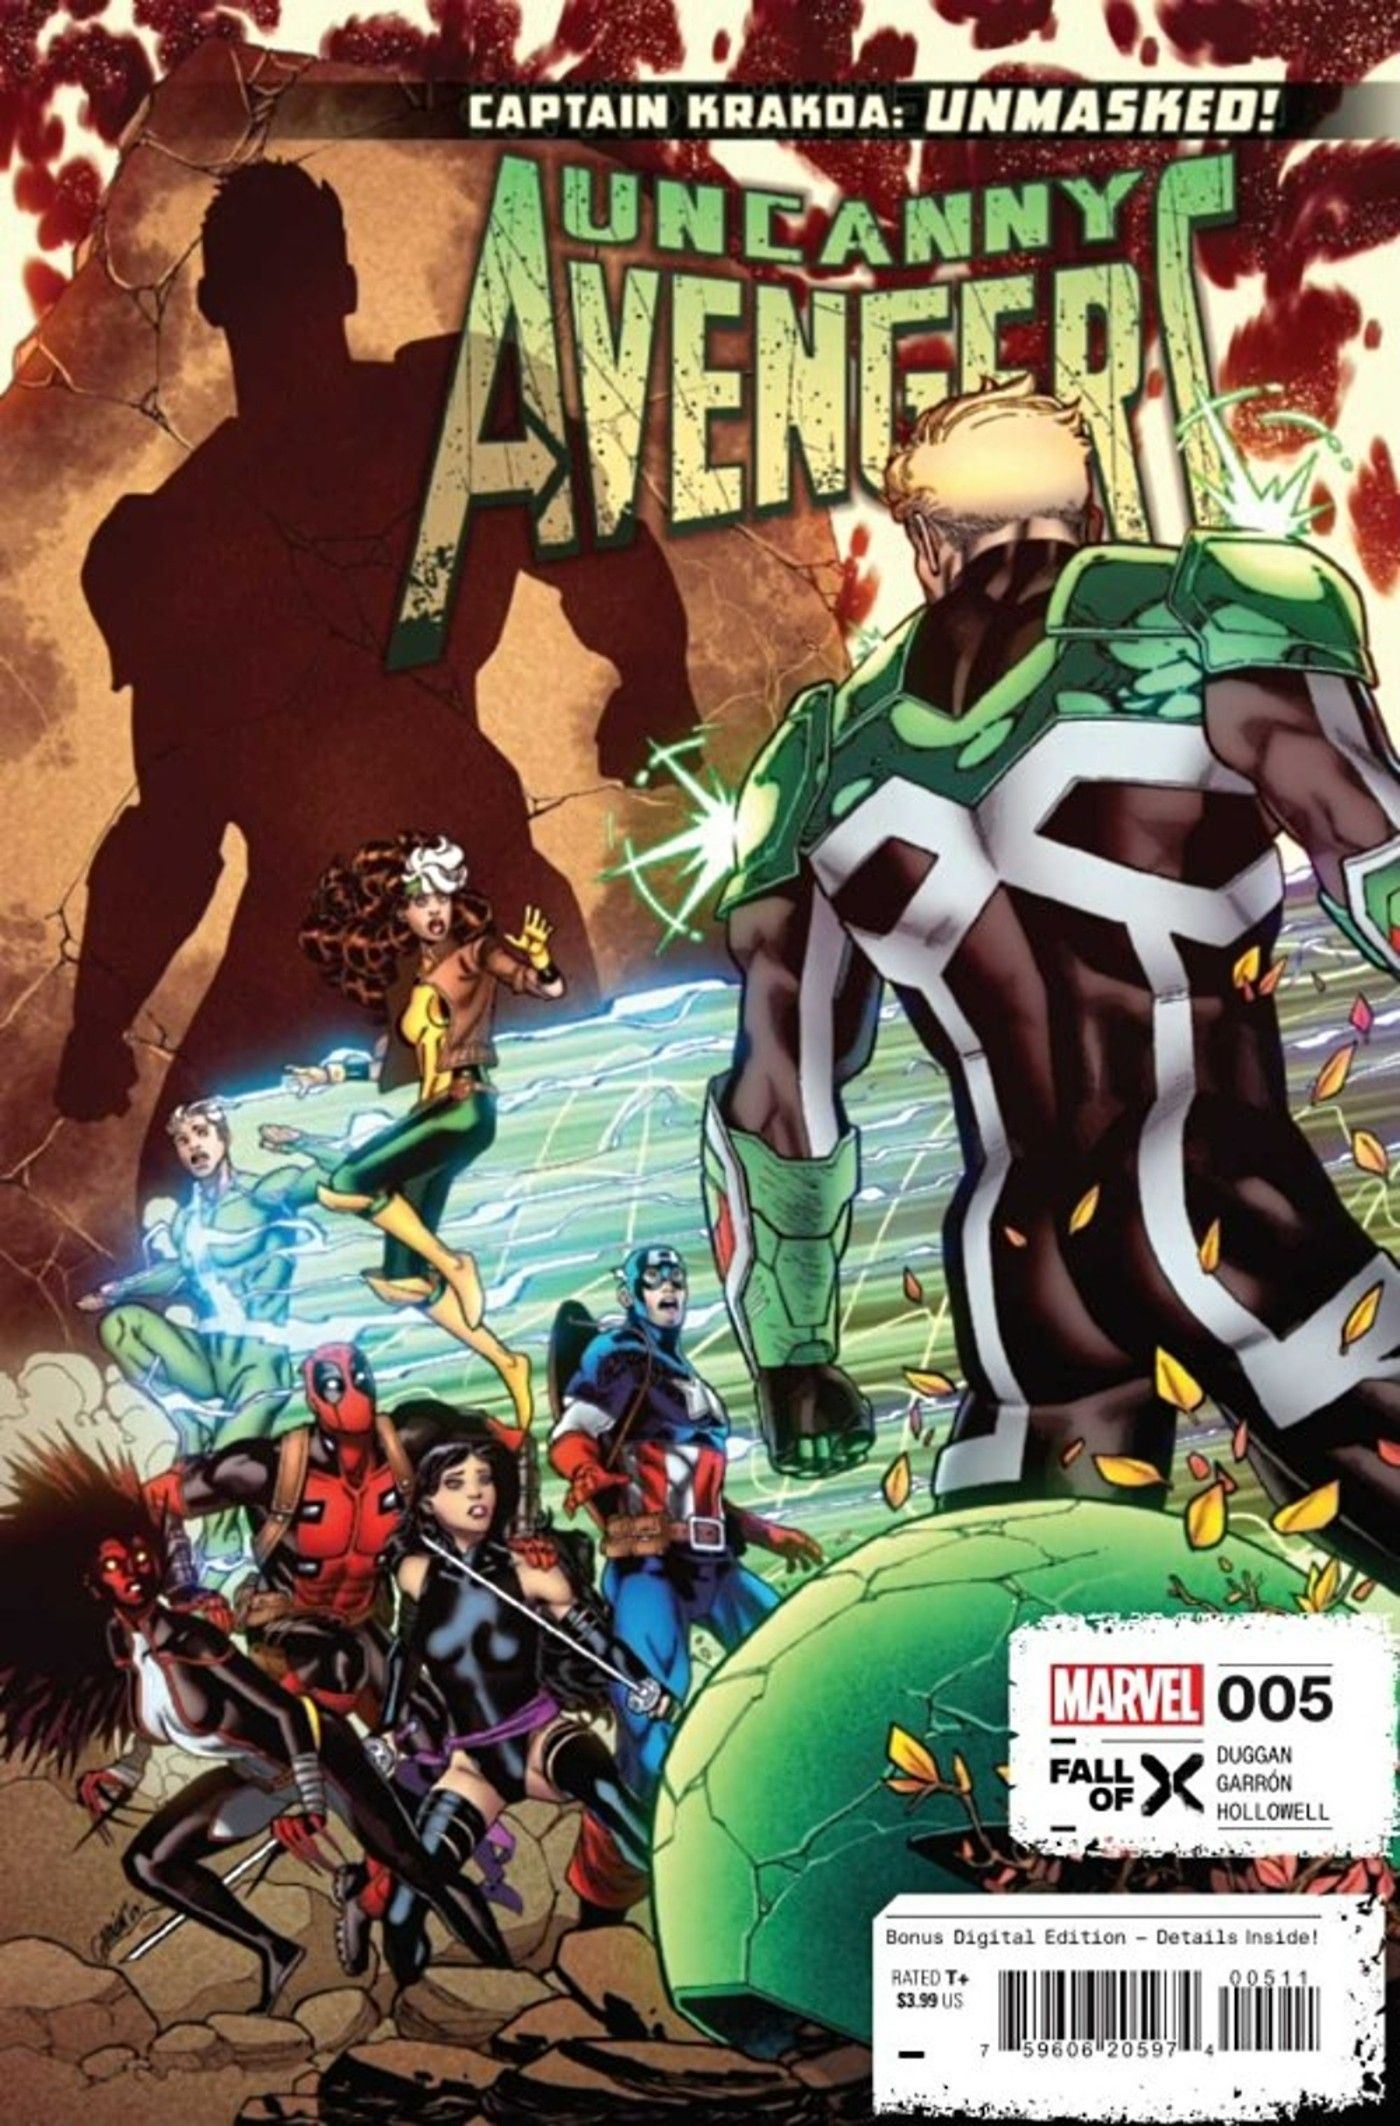 Primary cover for Uncanny Avengers #5 (by Javier Garron)